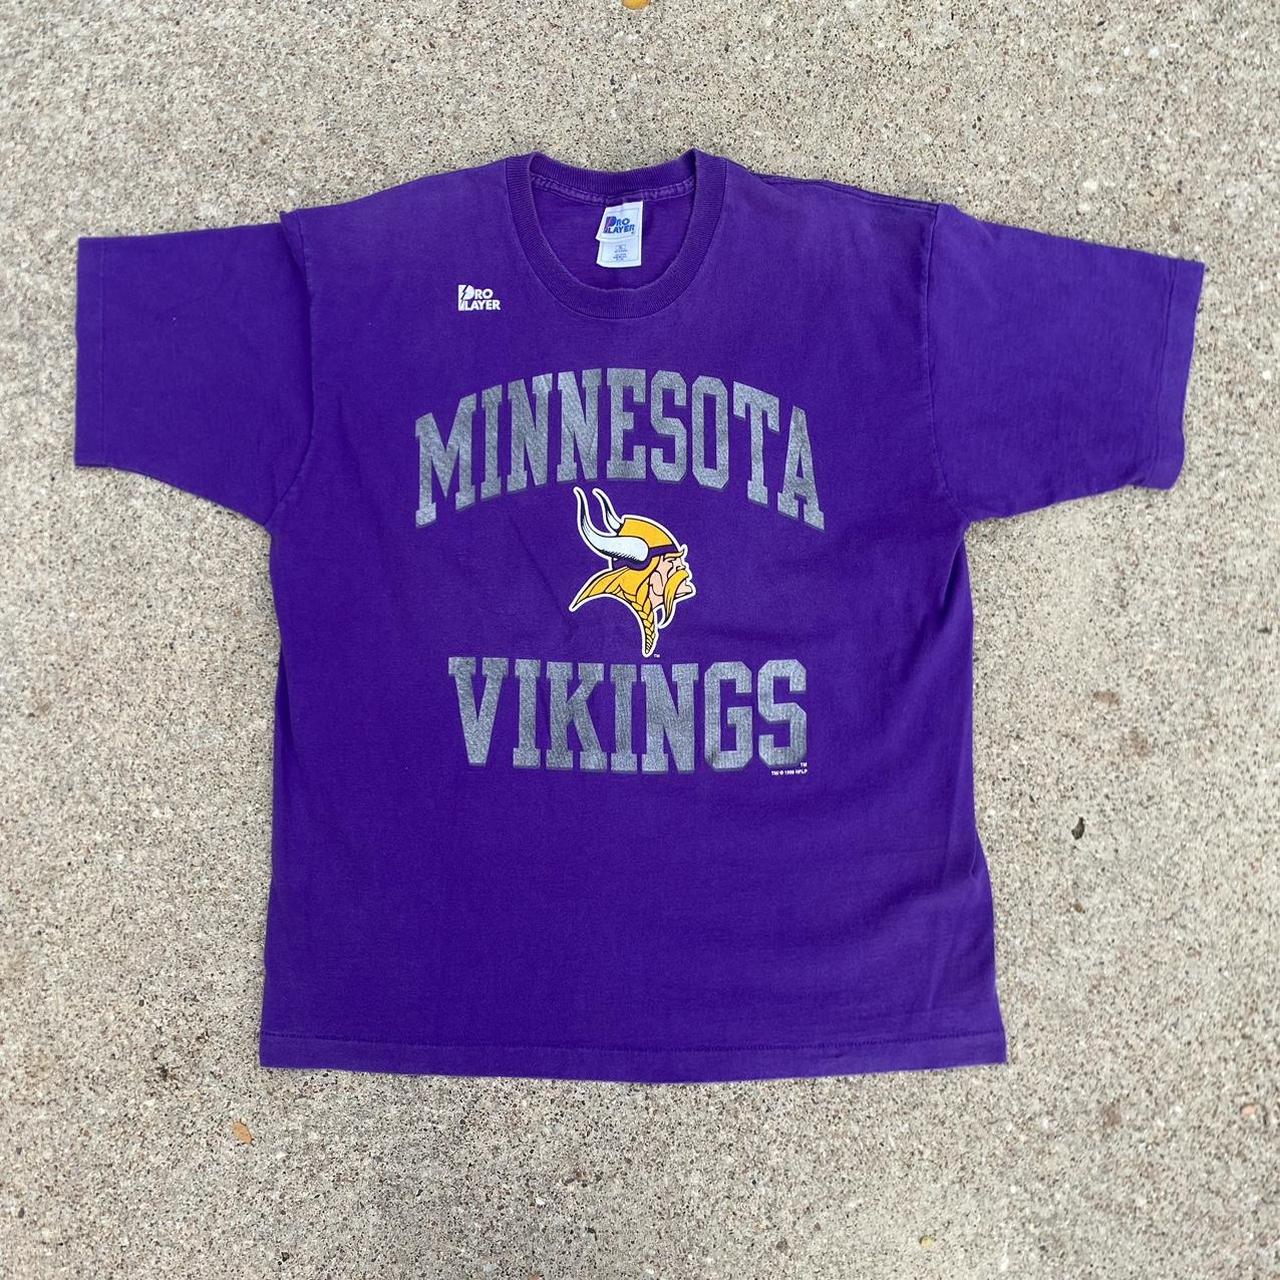 Cool Minnesota Vikings Tee Very Good Condition ... - Depop